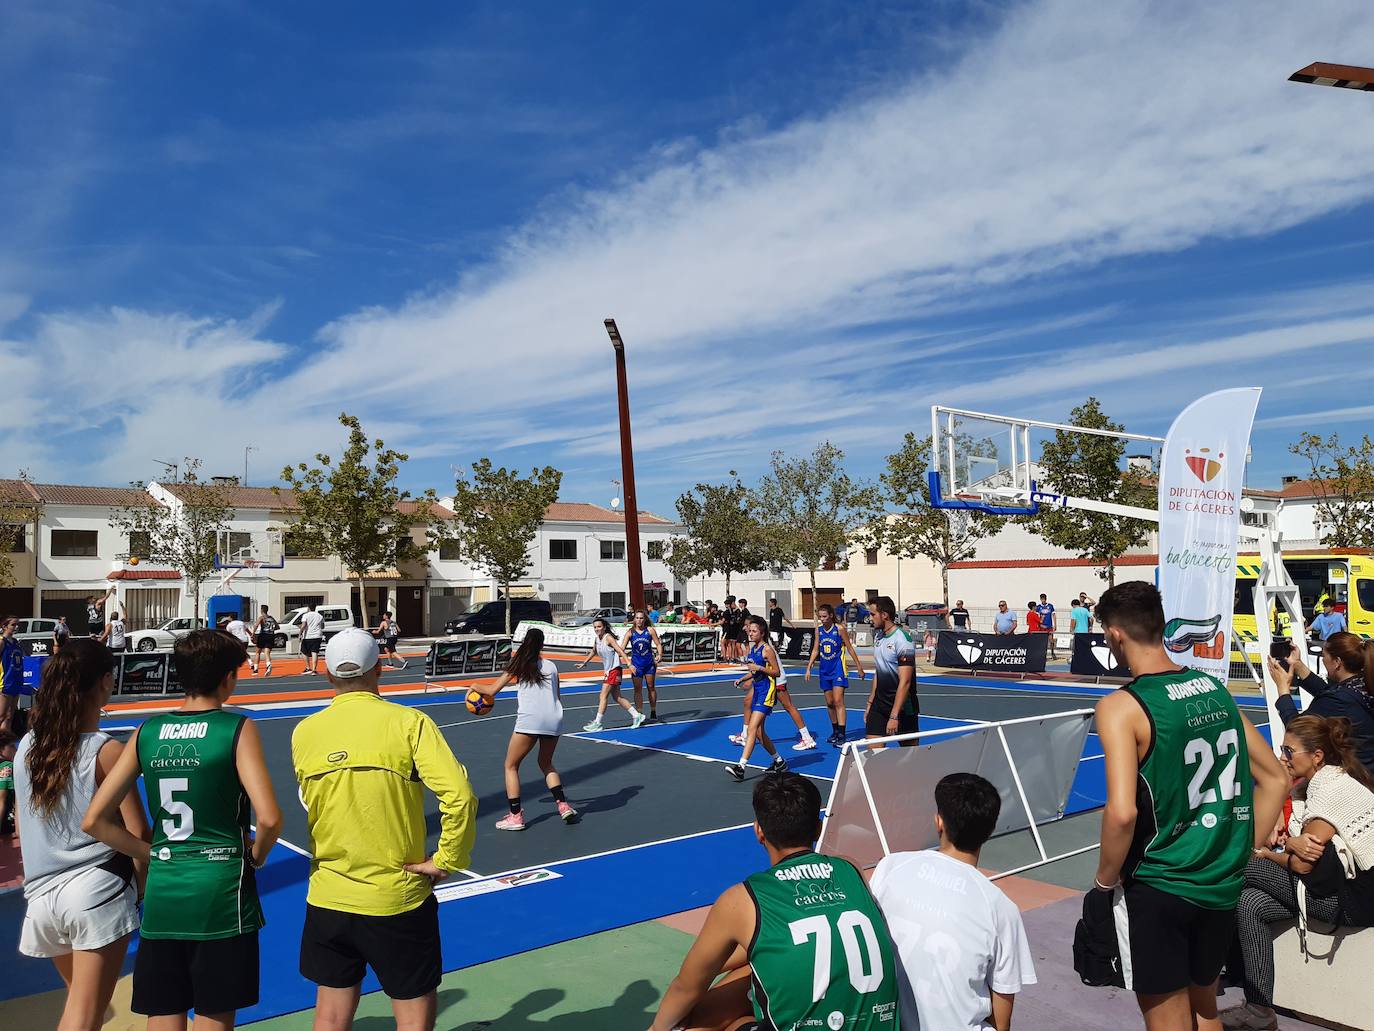 La plaza de Sancho IV albergó ayer dos pistas de baloncesto para encuentros 3x3. /L.C.G.